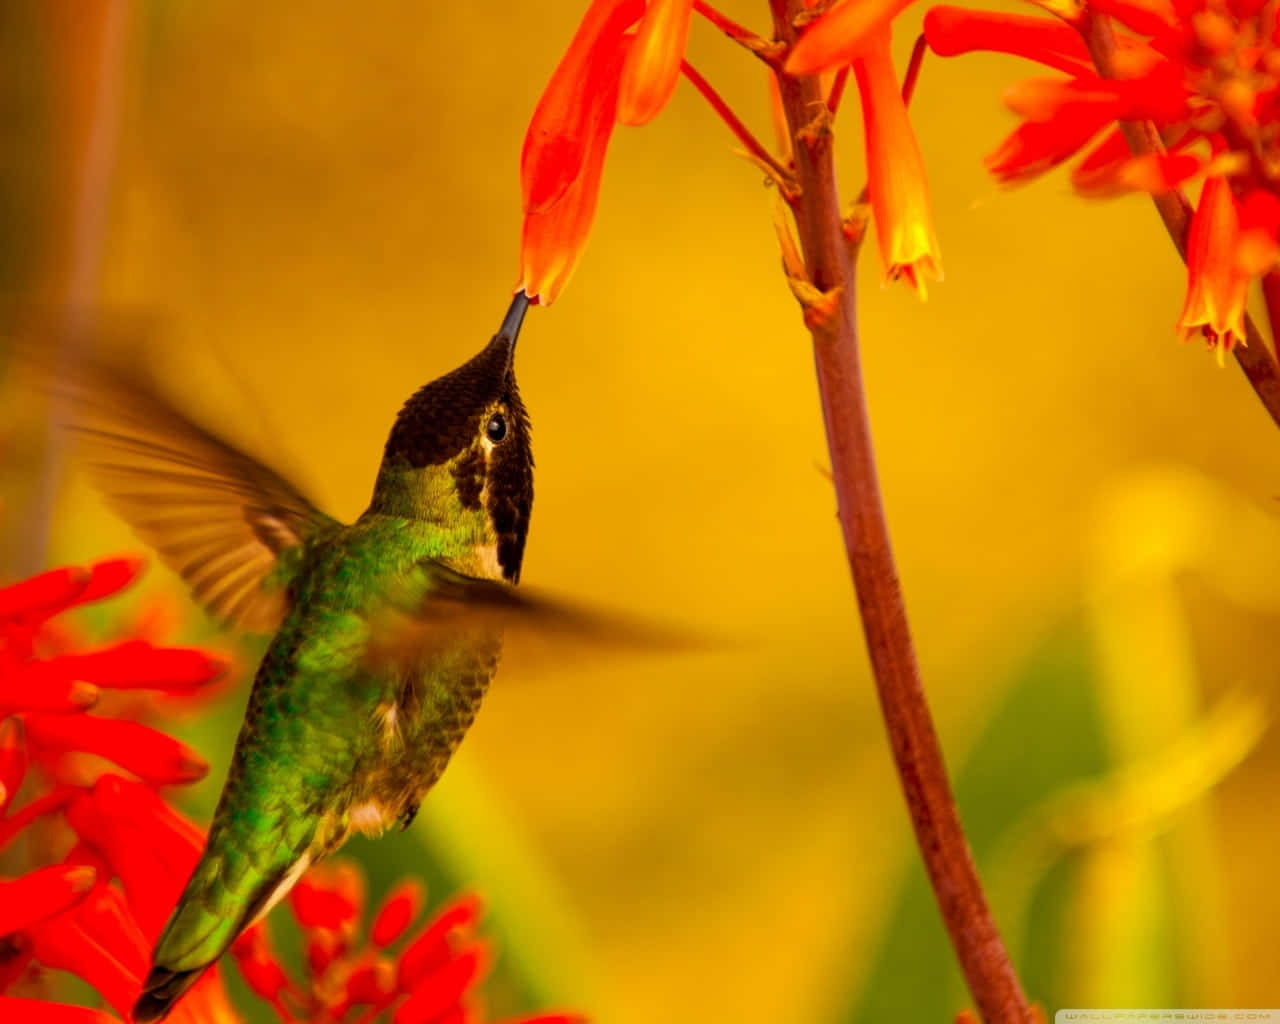 Female Hummingbird in Flight at Sunrise